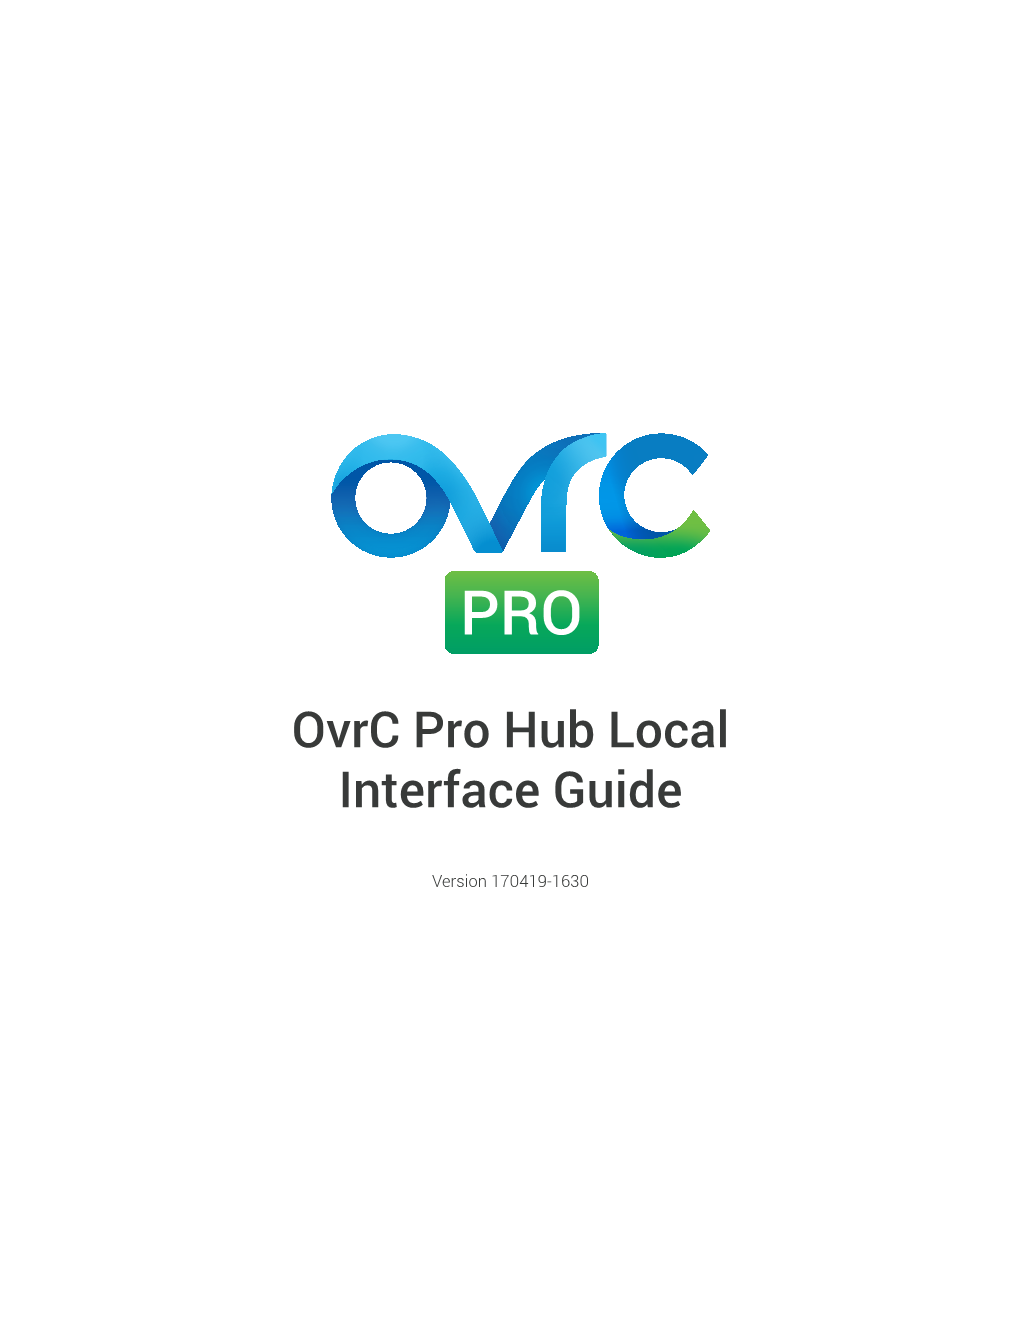 Ovrc Pro Hub Local Interface Guide